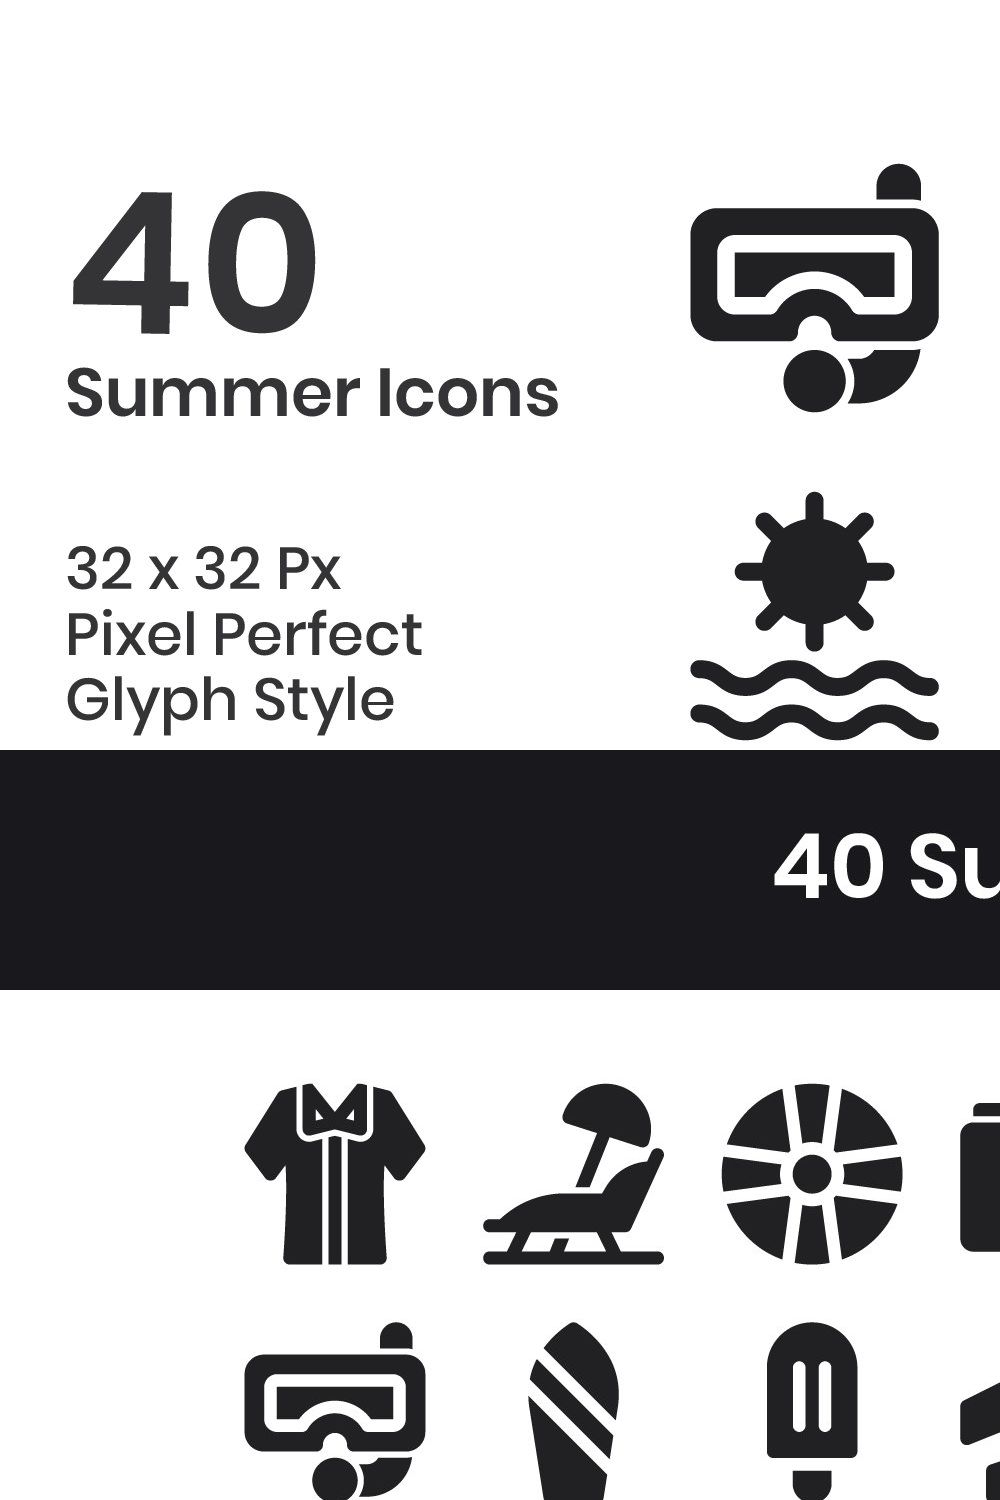 40 Summer - Glyph pinterest preview image.